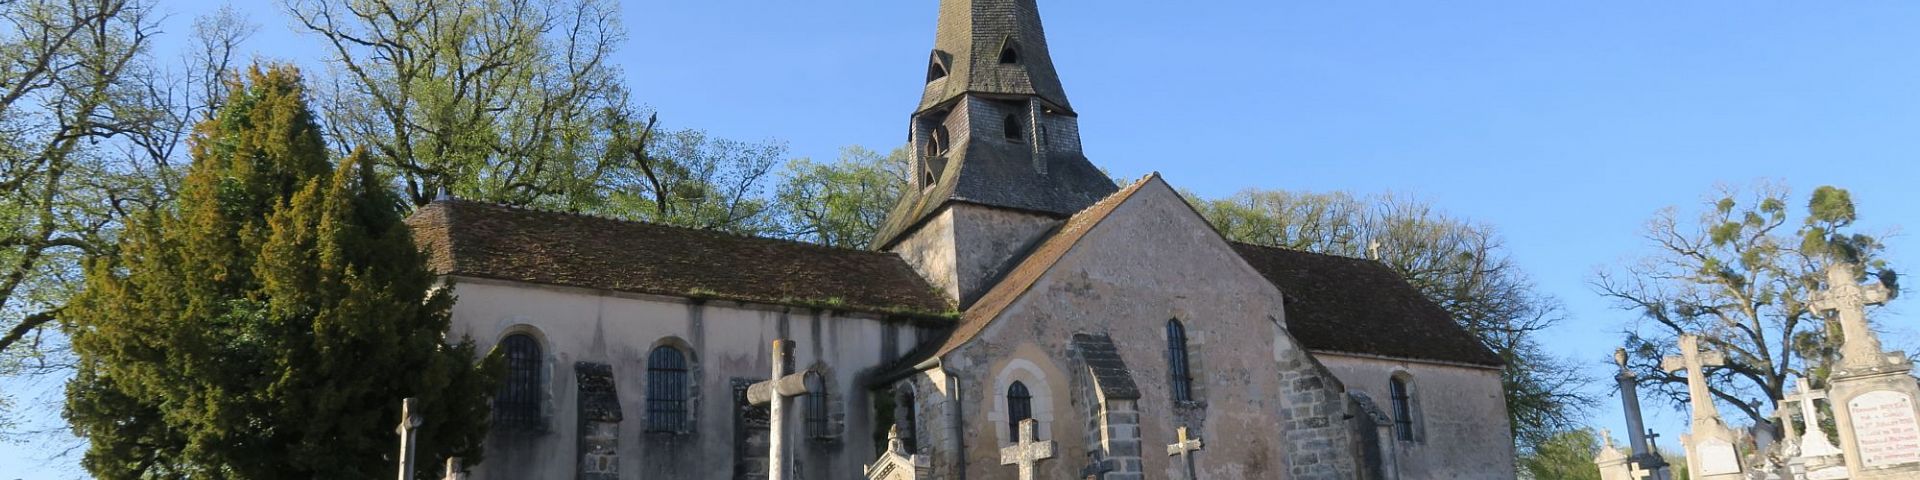 Saulieu - Eglise Saint-Saturnin (21)